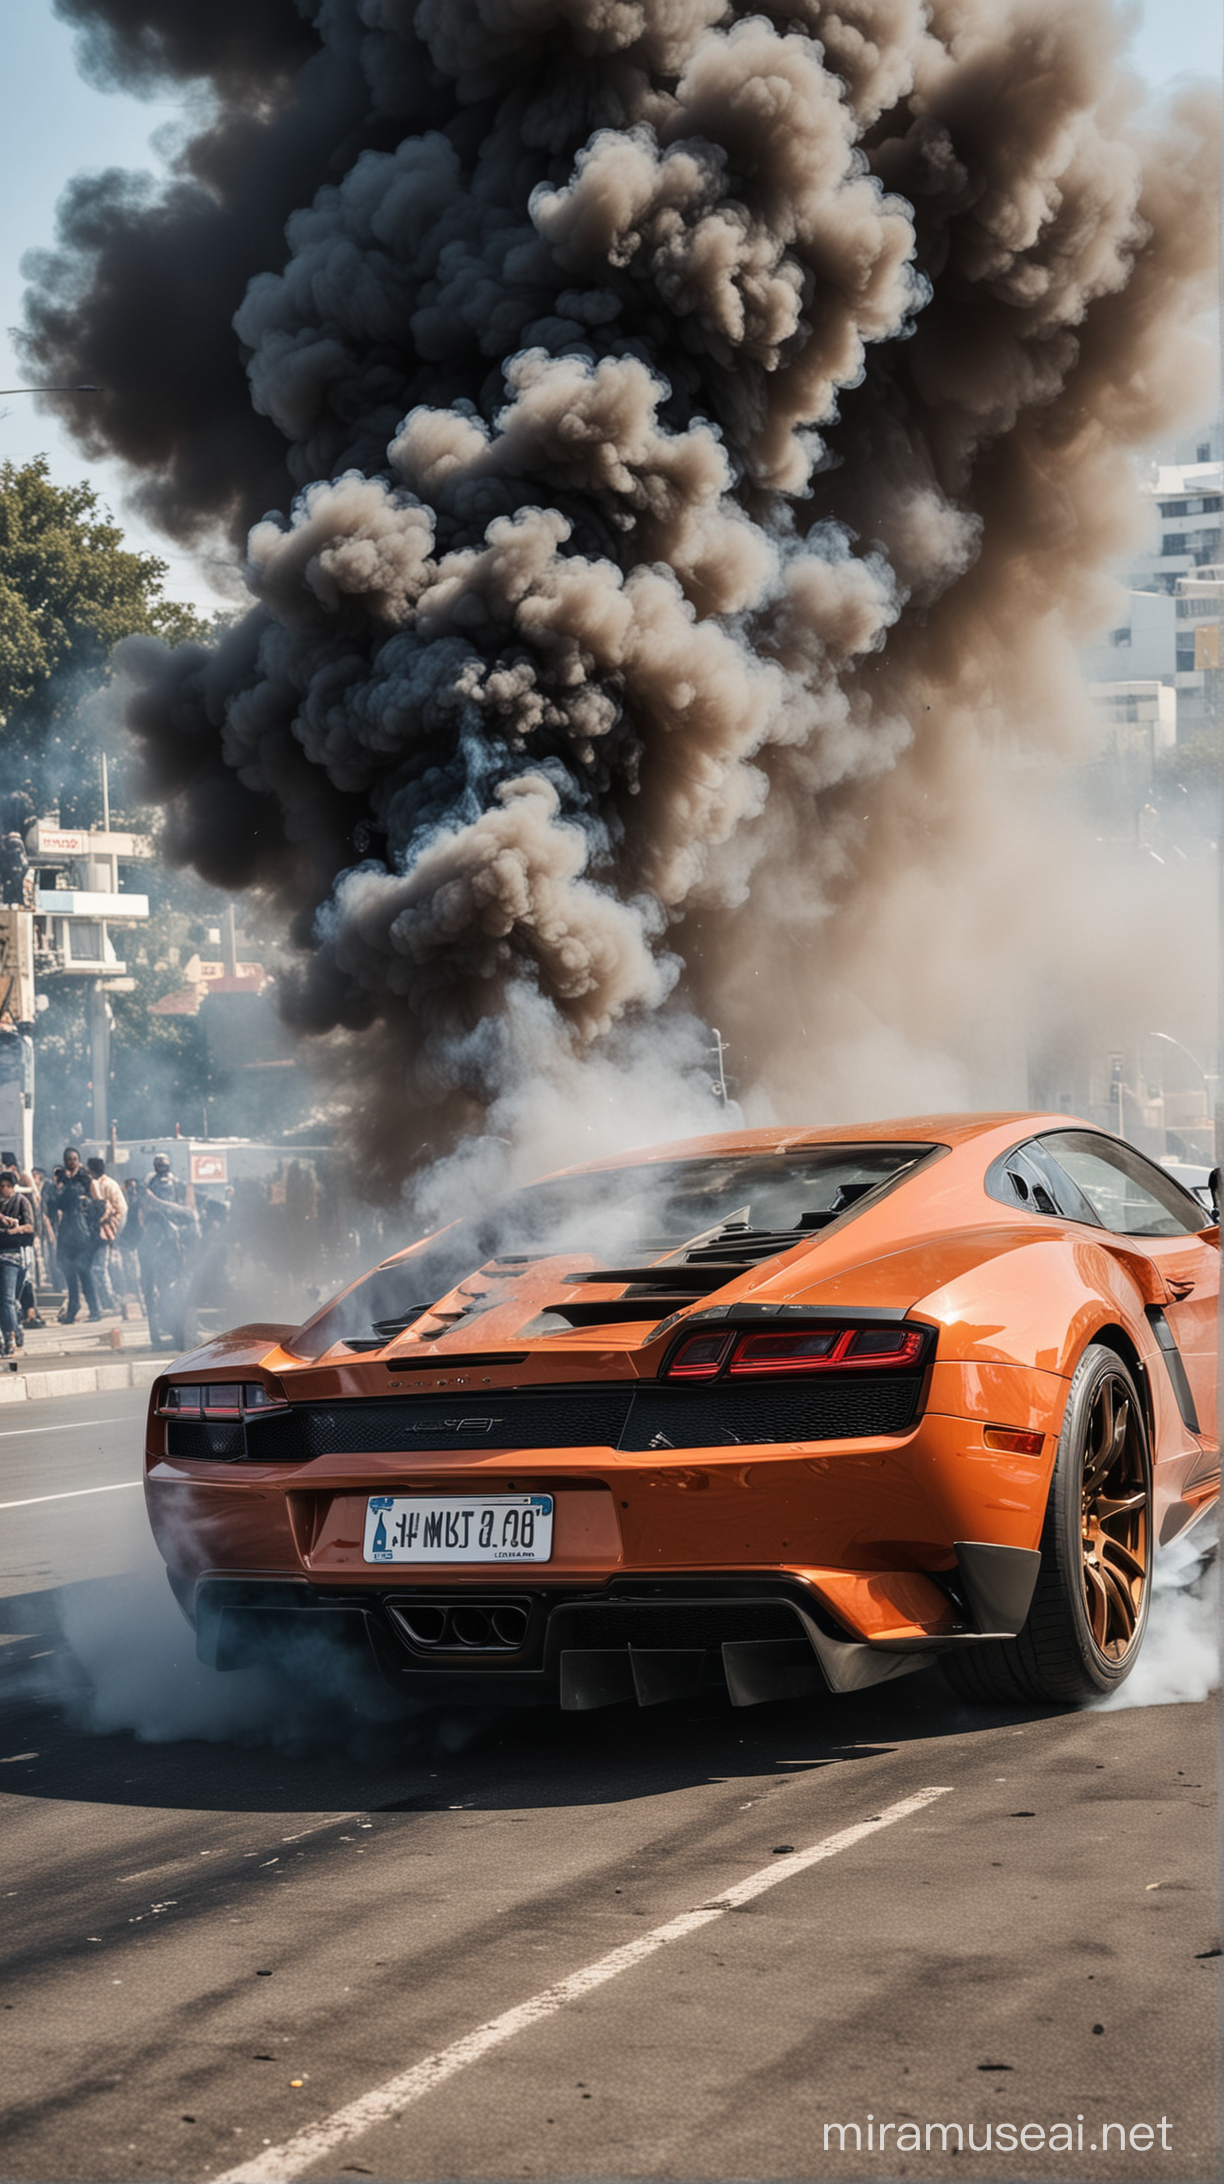 Luxury Sports Car Emitting Smoke